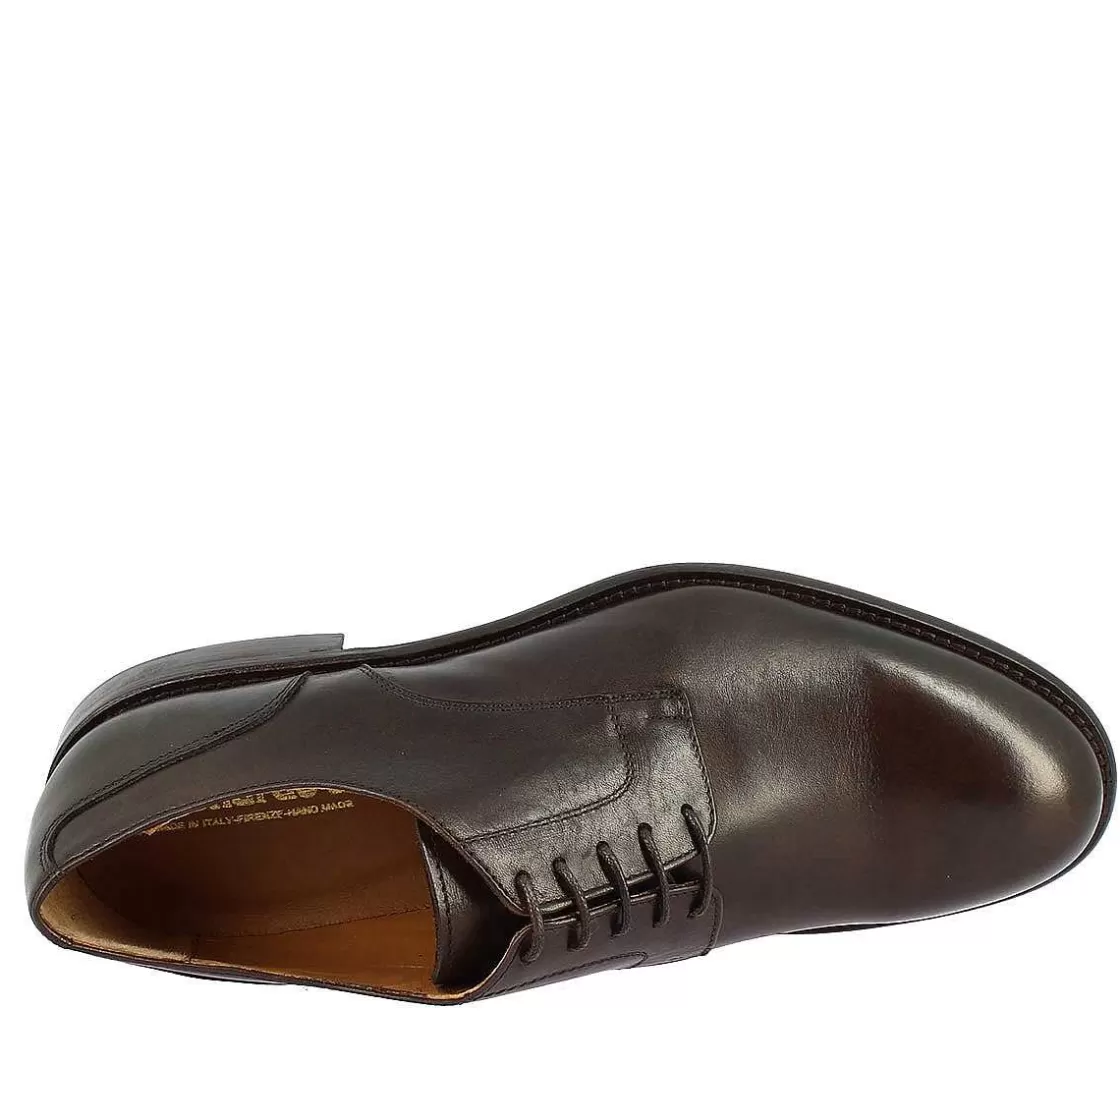 Leonardo Handmade Men'S Oxford Shoes In Dark Brown Leather Hot